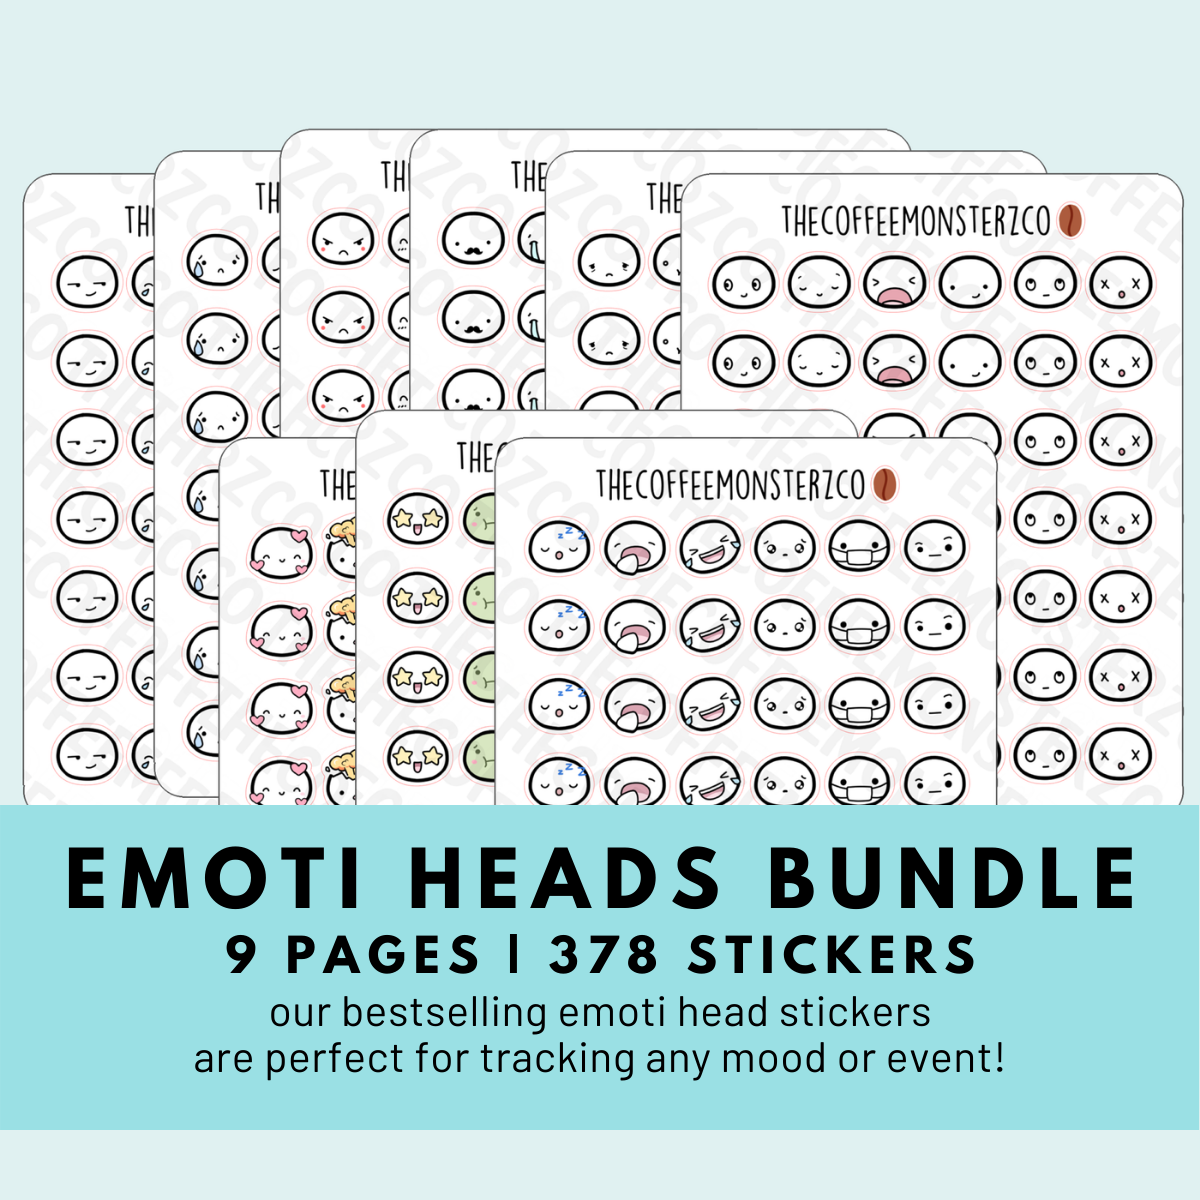 Emoti Heads Buy All Bundle